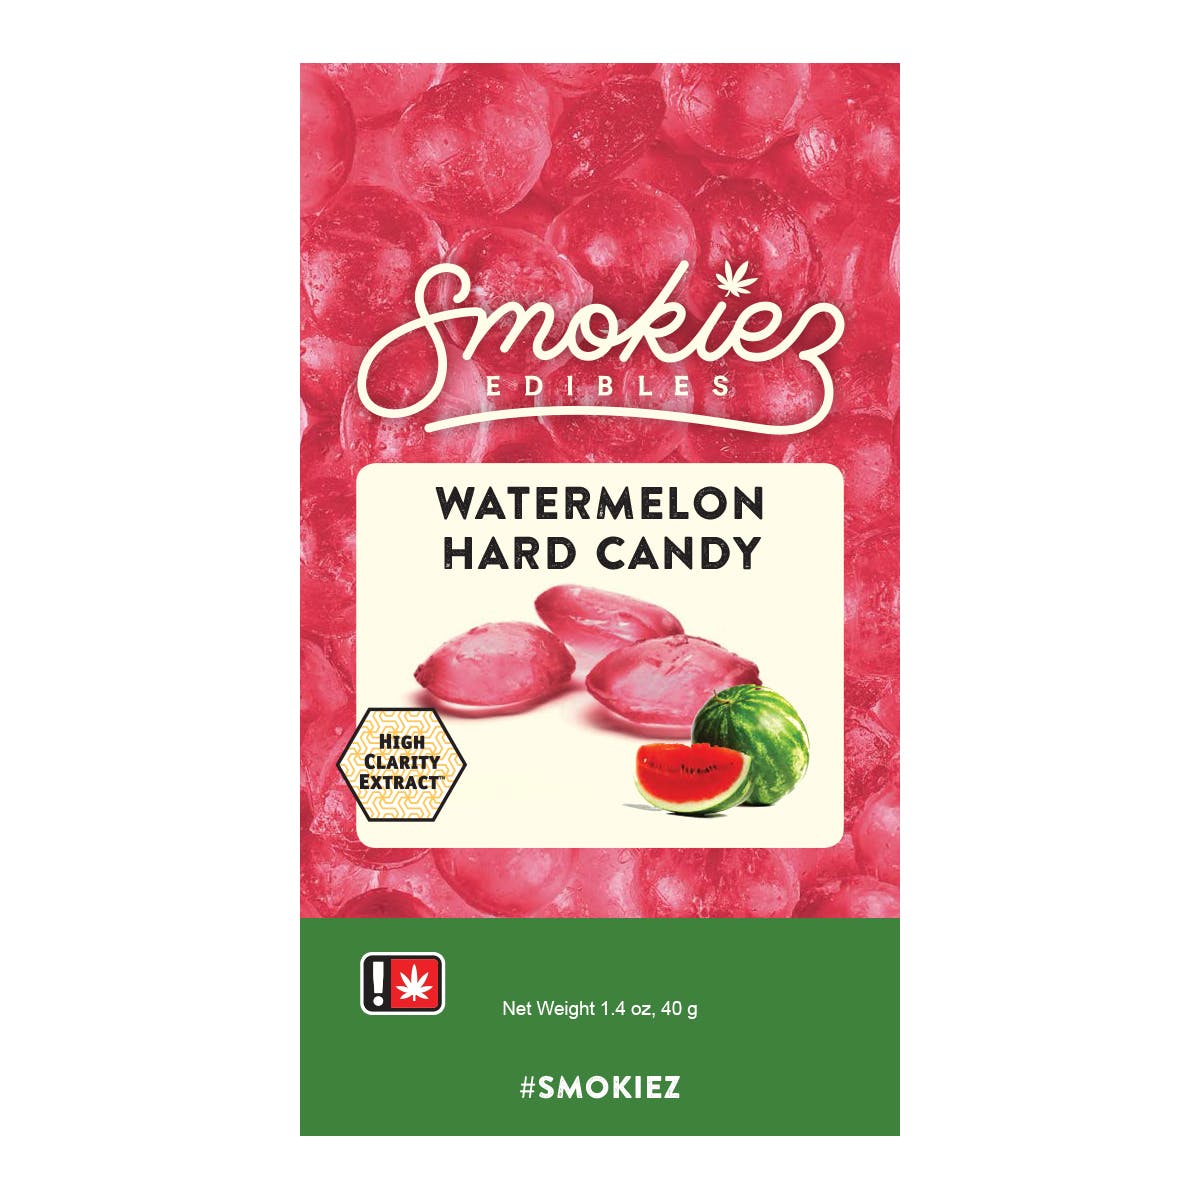 edible-smokiez-edibles-watermelon-hard-candy-2c-50-mg